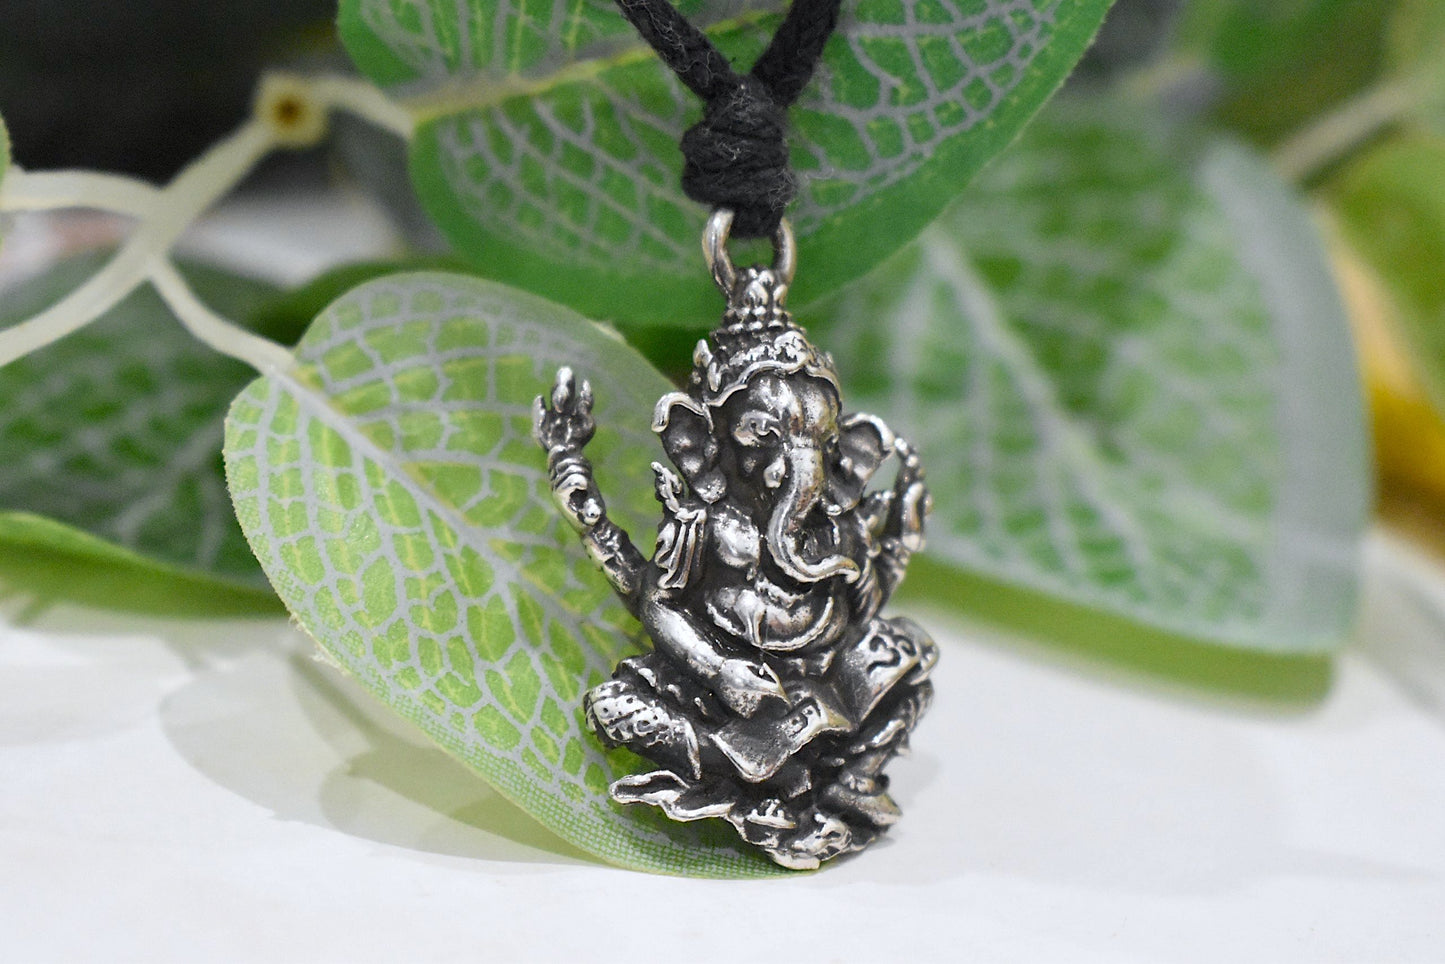 Hindu Ganesh Elephant God Silver Pewter Gold Brass Necklace Pendant Jewelry